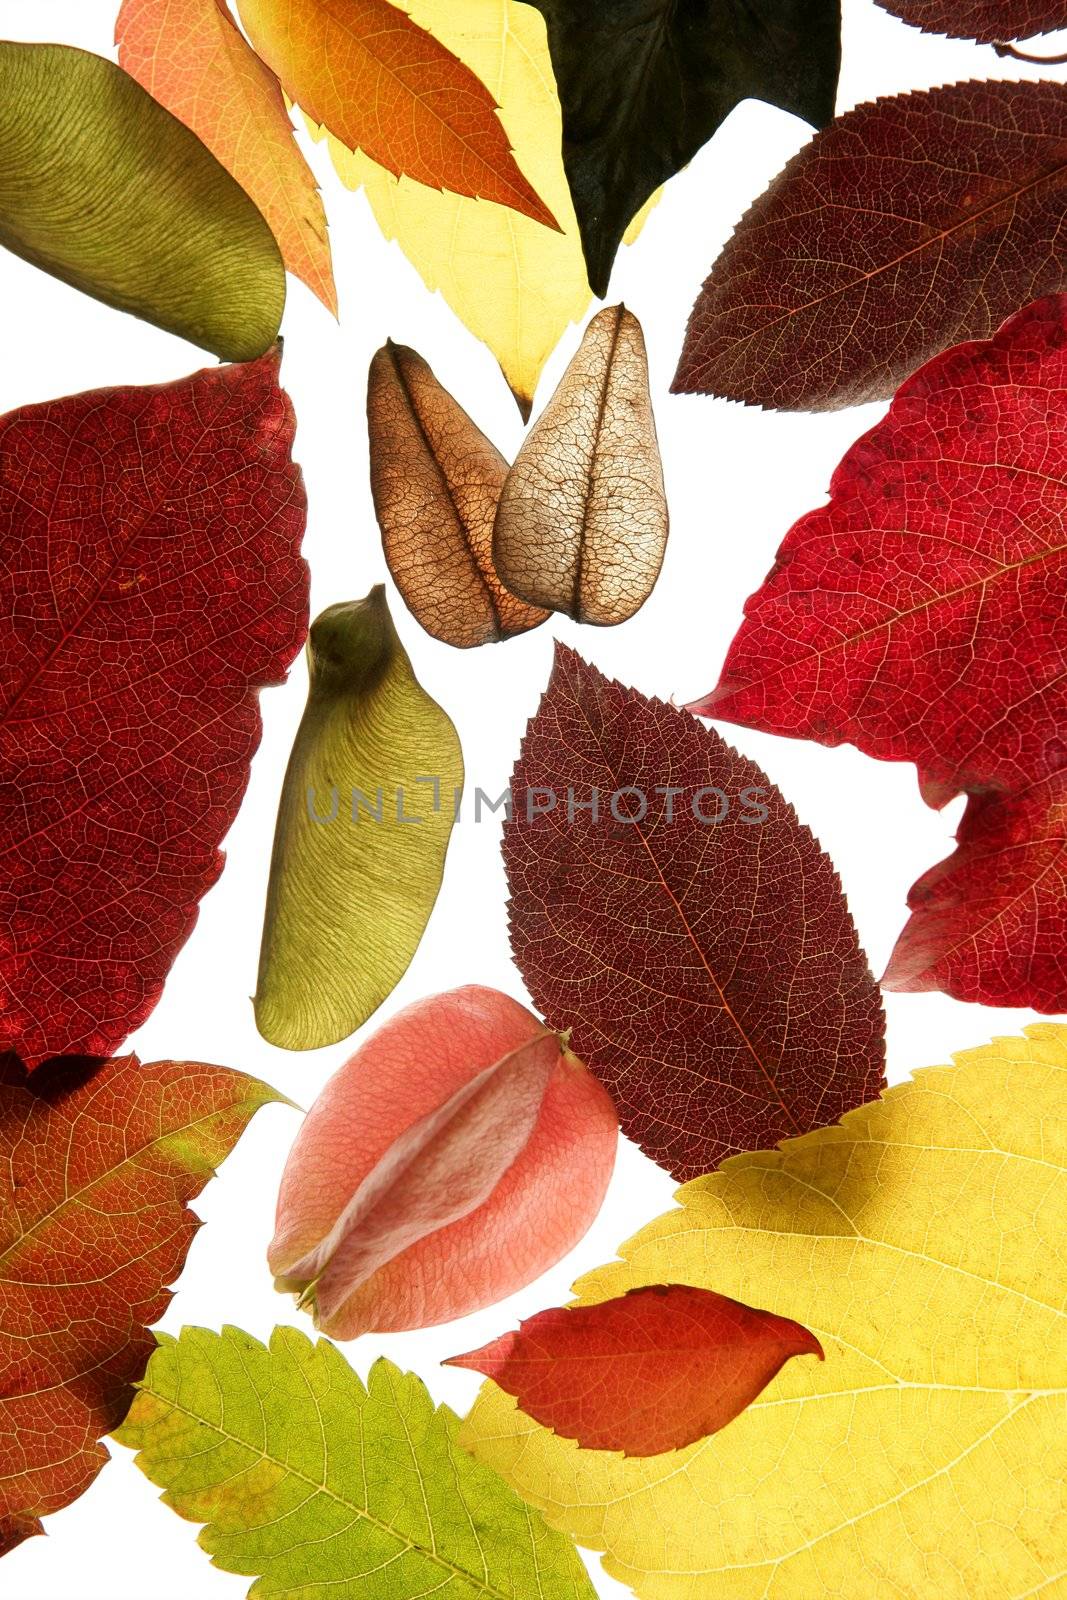 Autumn, fall leaves decorative still at studio white background by lunamarina